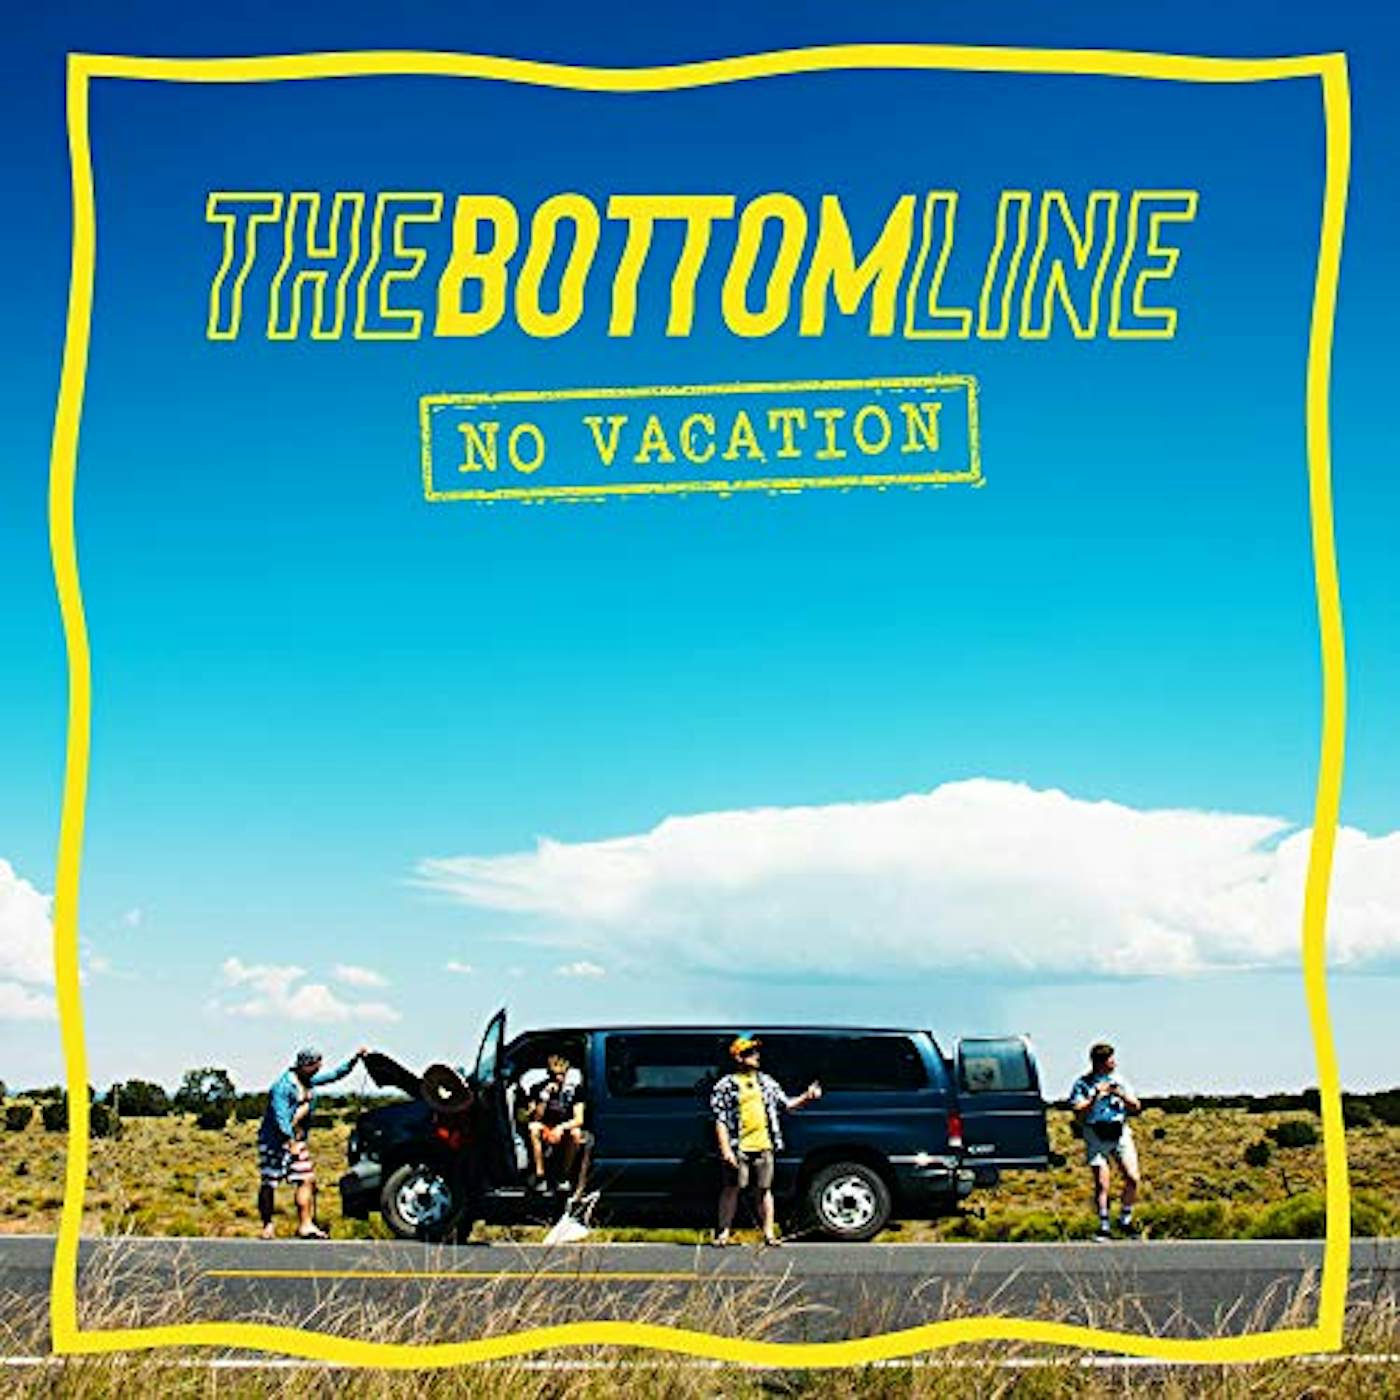 The Bottom Line No Vacation Vinyl Record